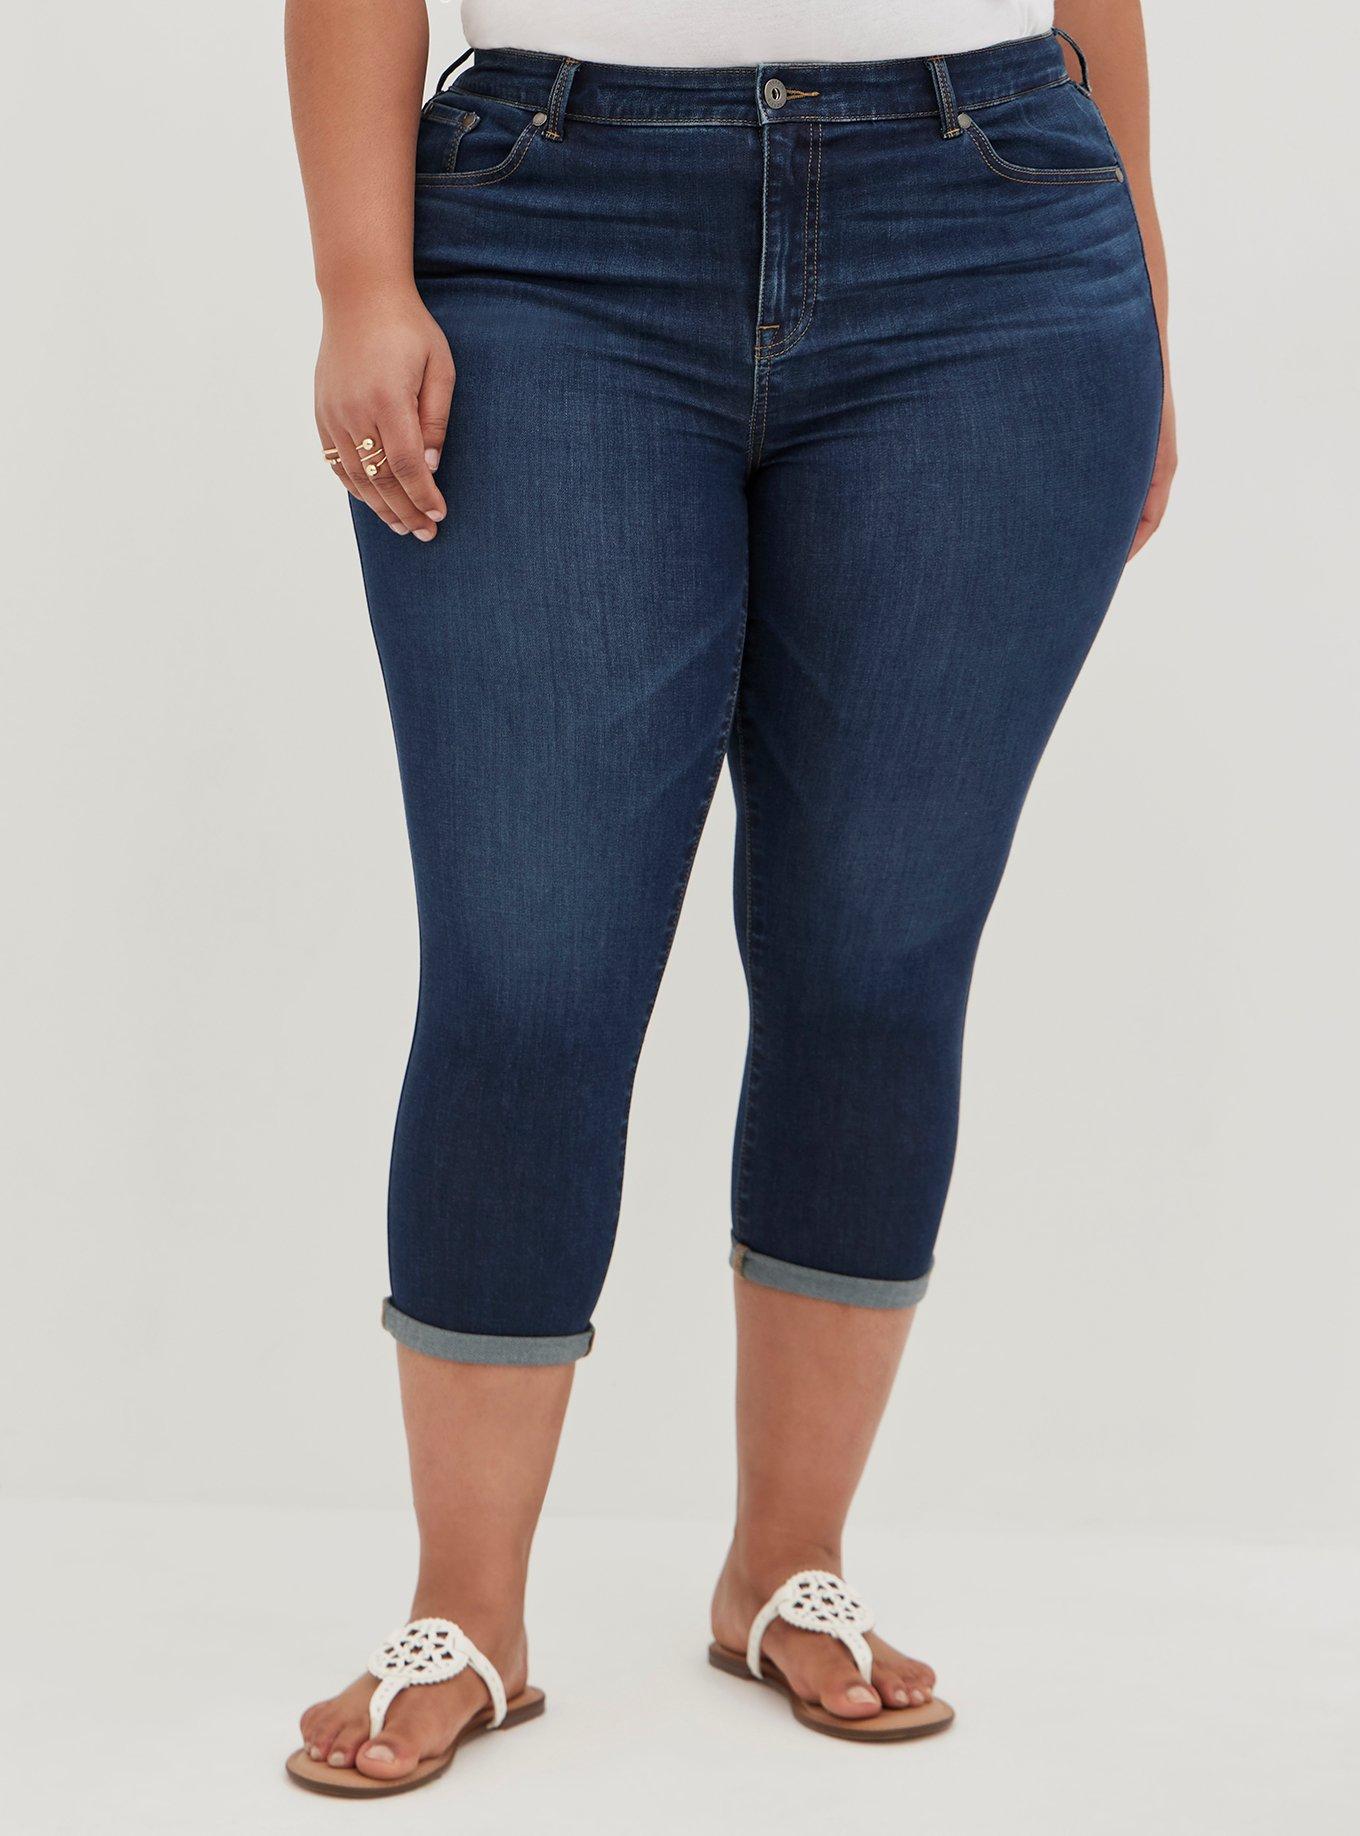 Plus Size - Crop Jean MidFit Super Mid-Rise Skinny Torrid Soft 